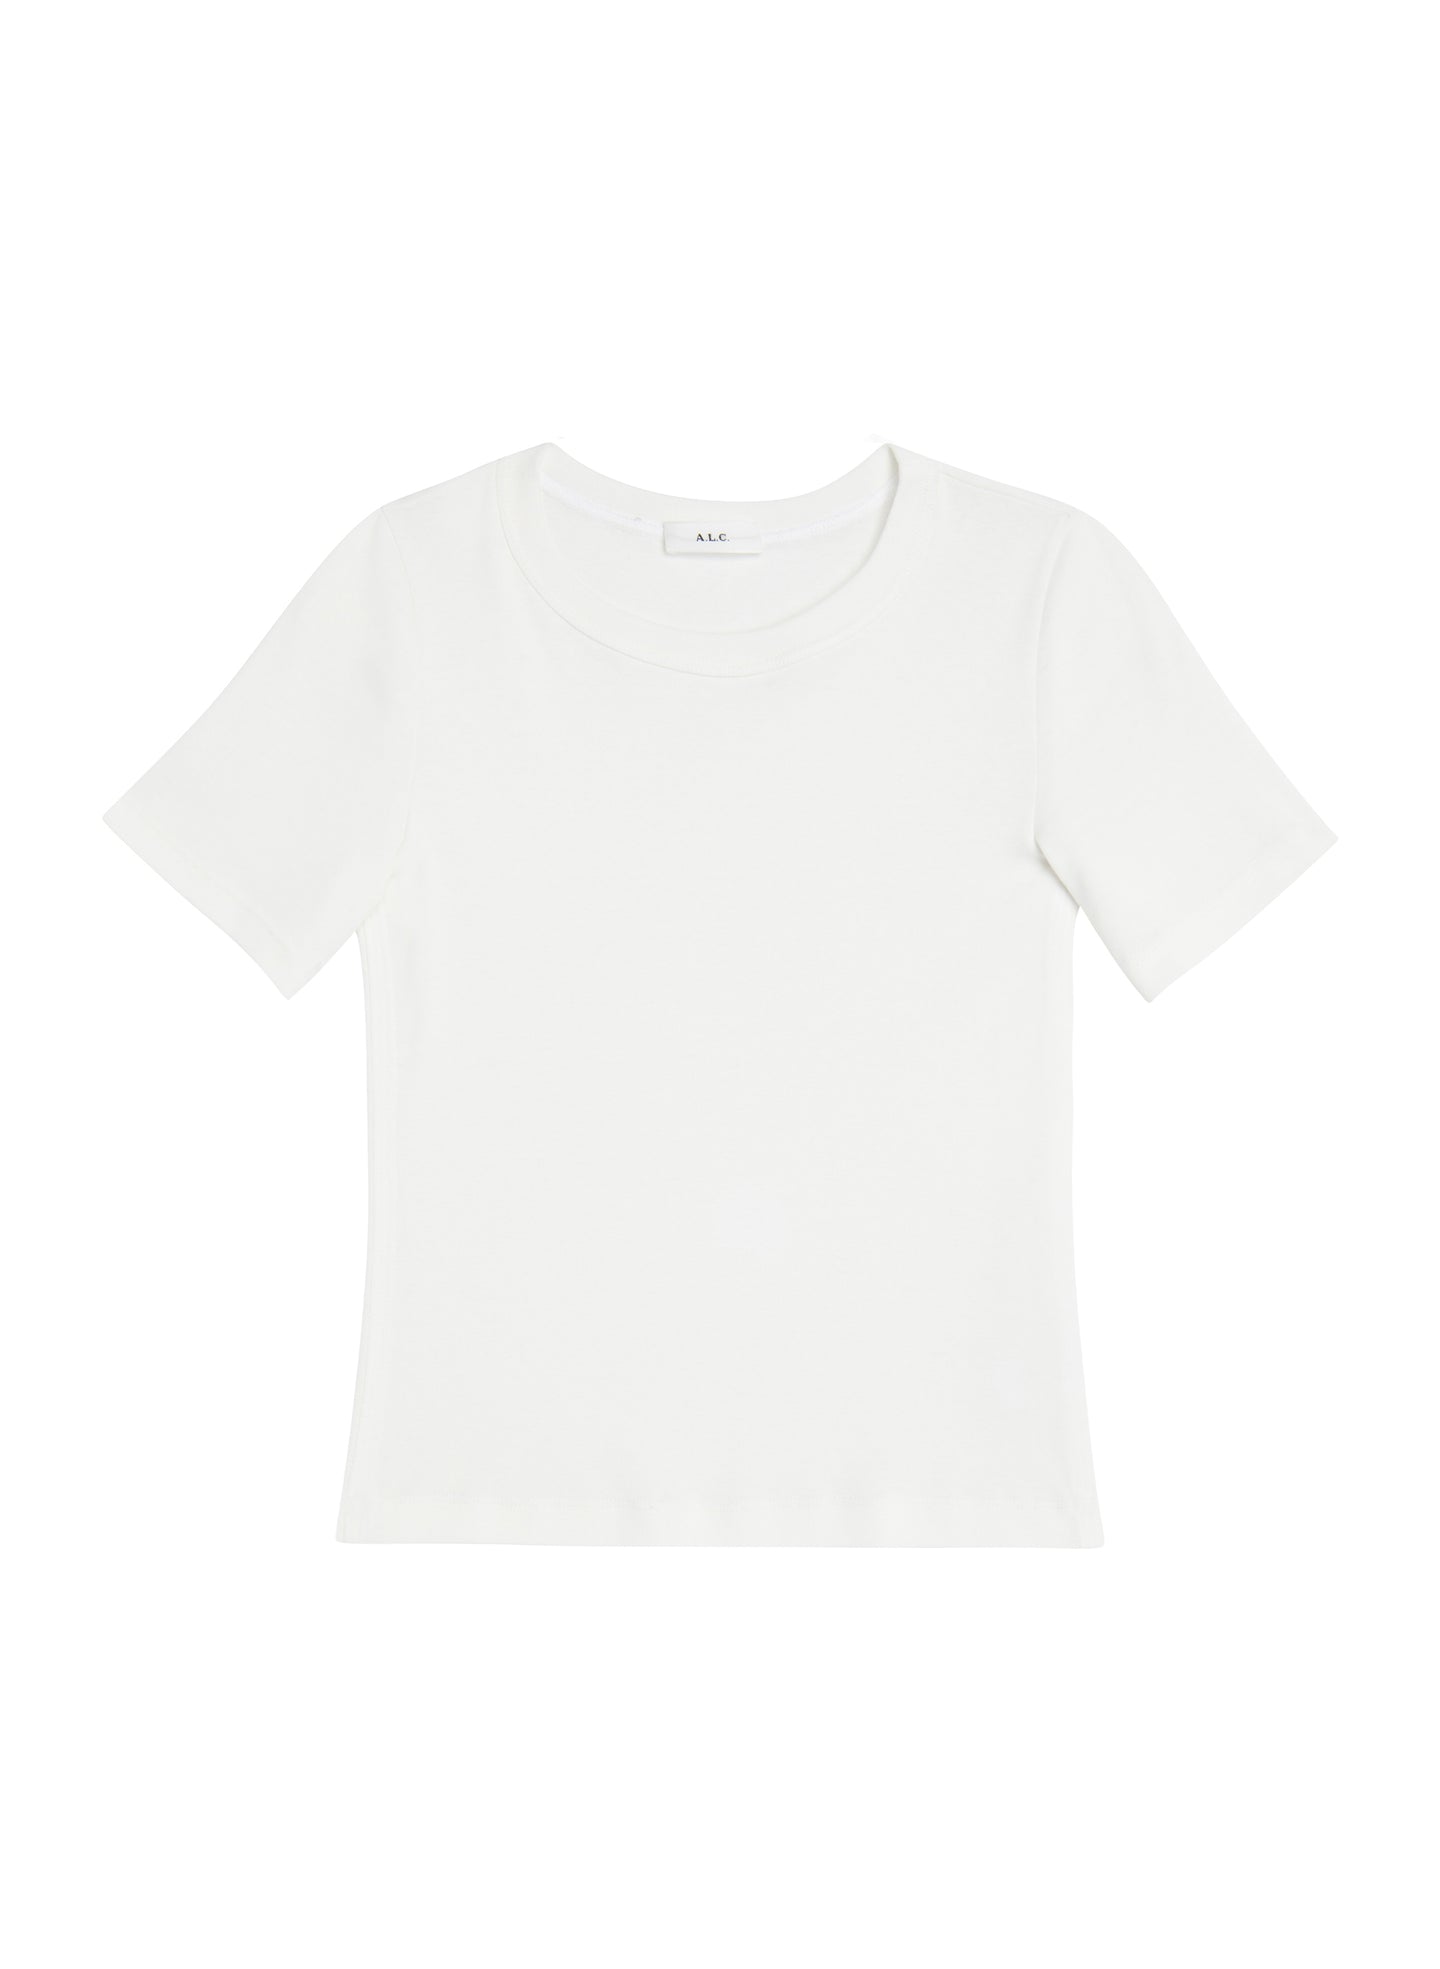 flatlay of white tshirt